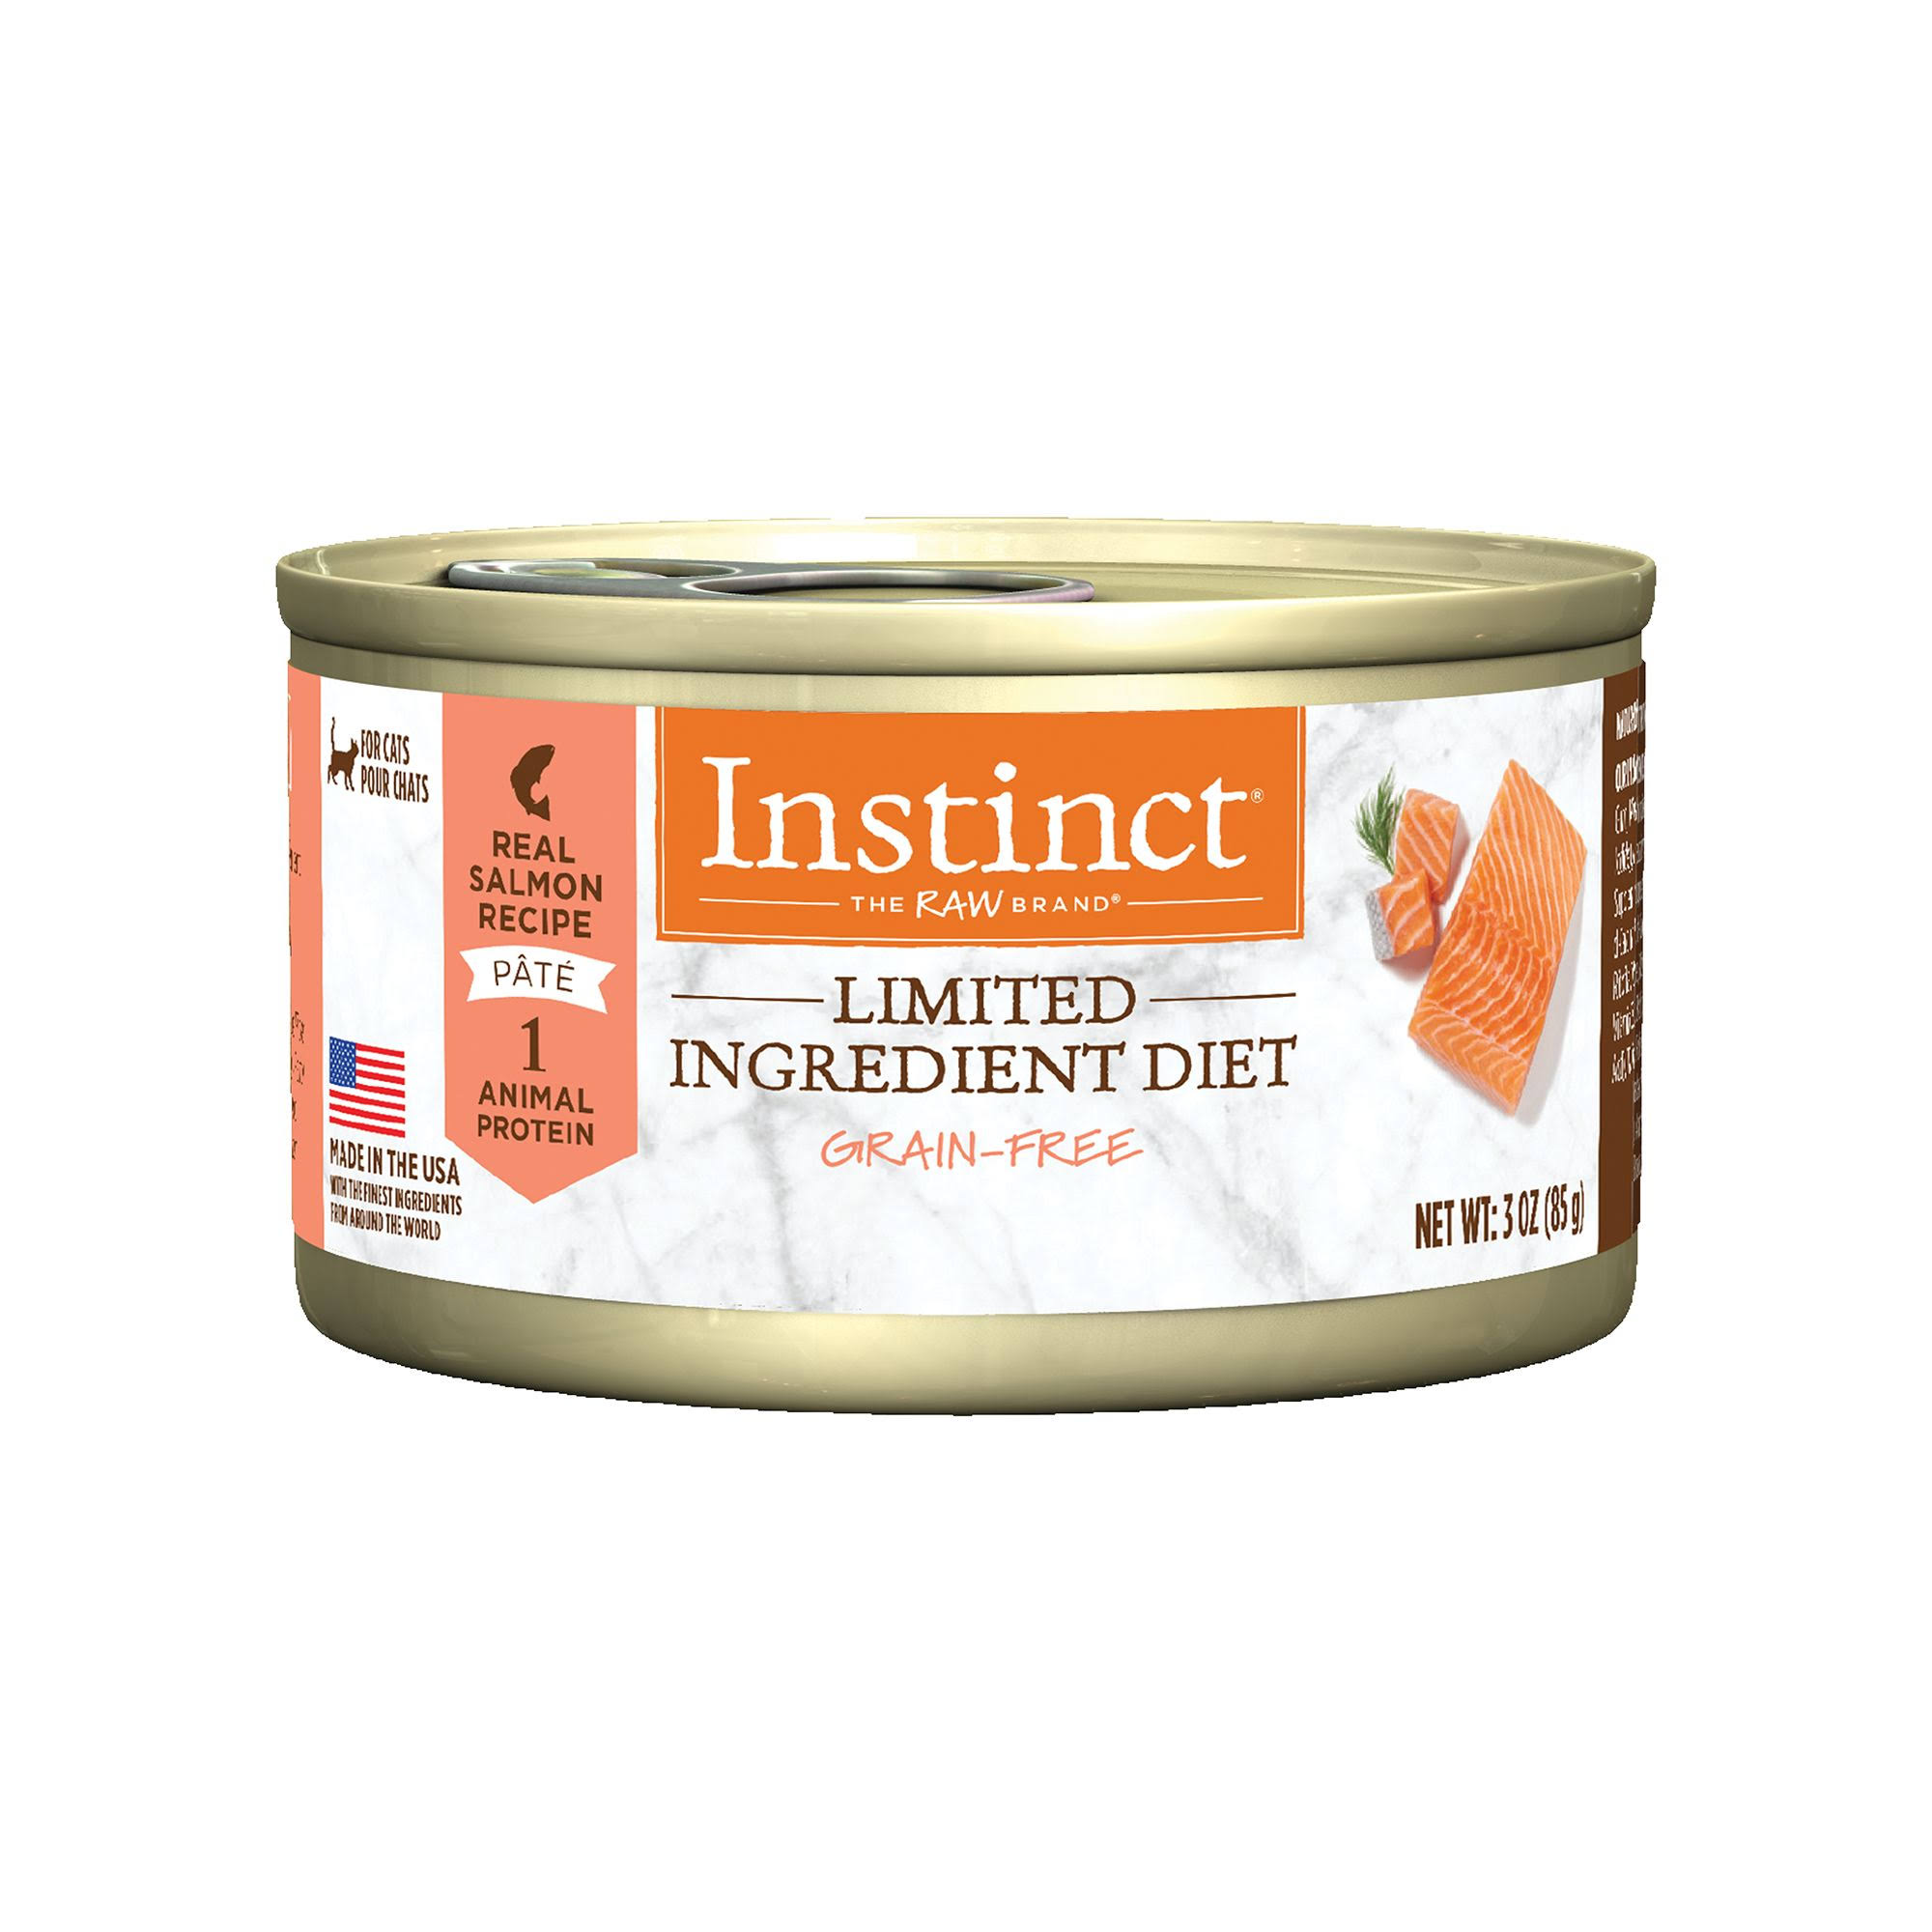 Instinct Limited Ingredient Diet Cat Food - Salmon, 3oz, 24pk